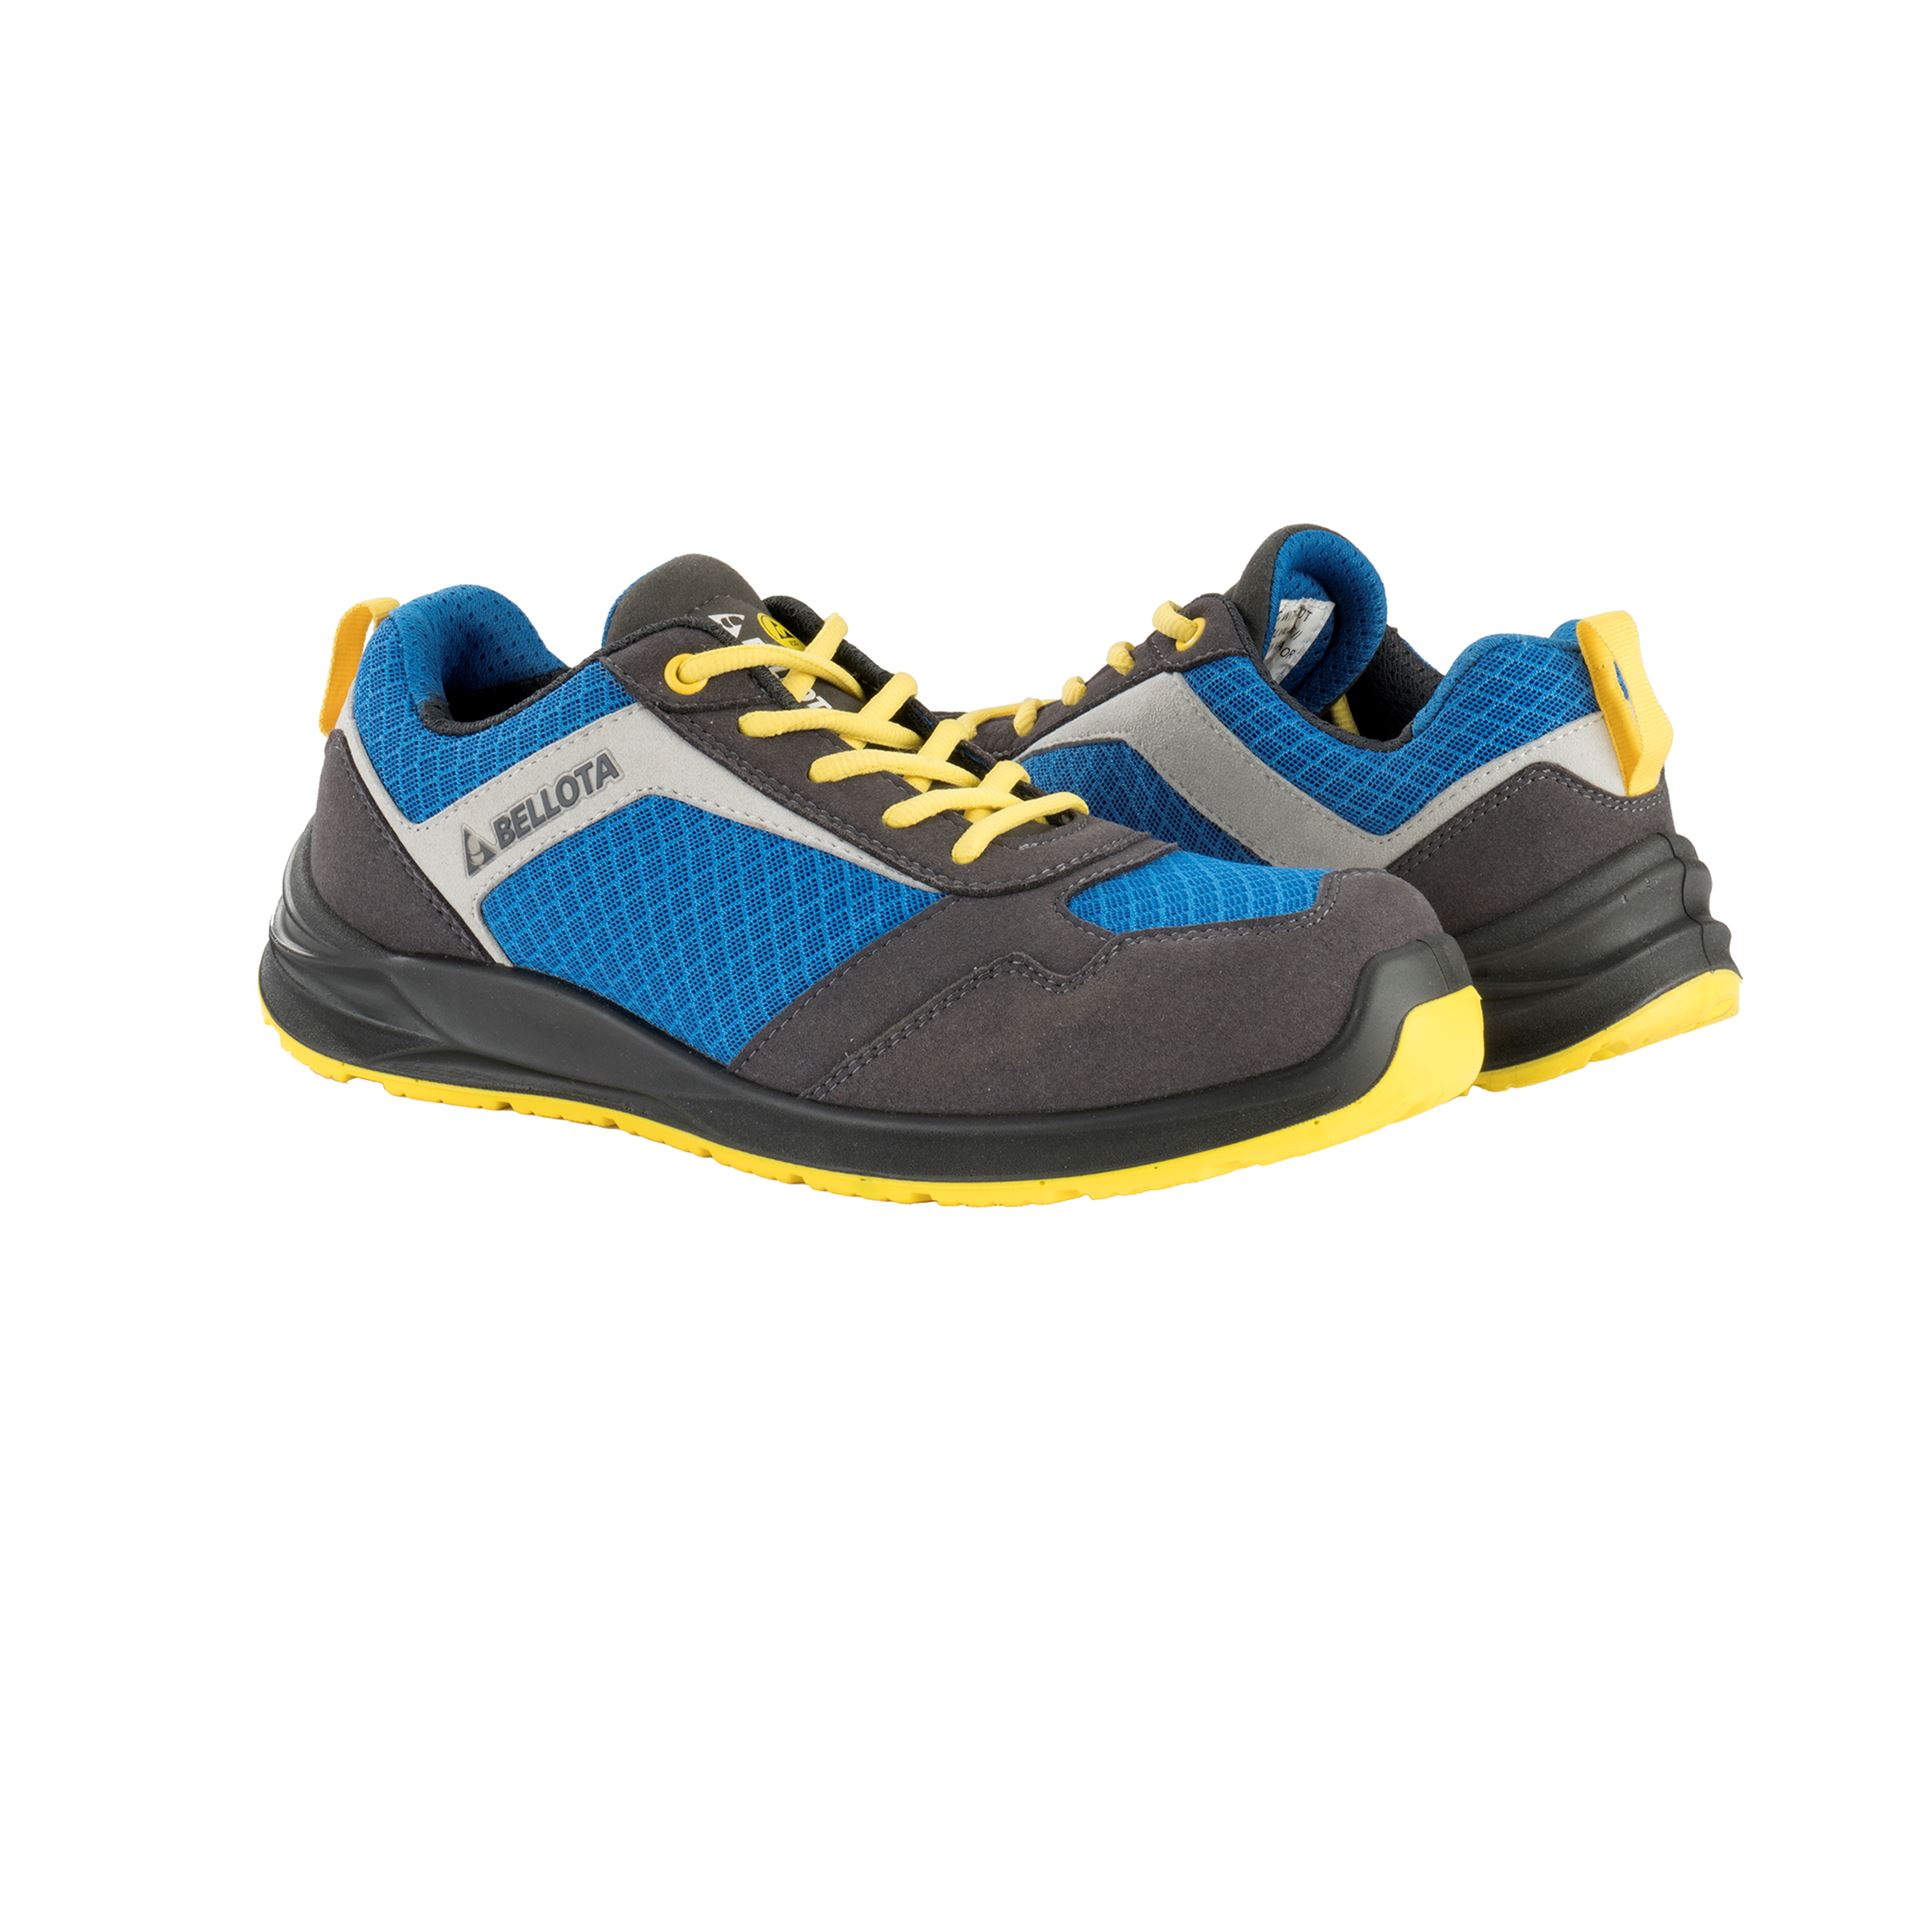 Zapato seguridad S1P Bellota azul-amarillo FTW05 - Suministros Urquiza